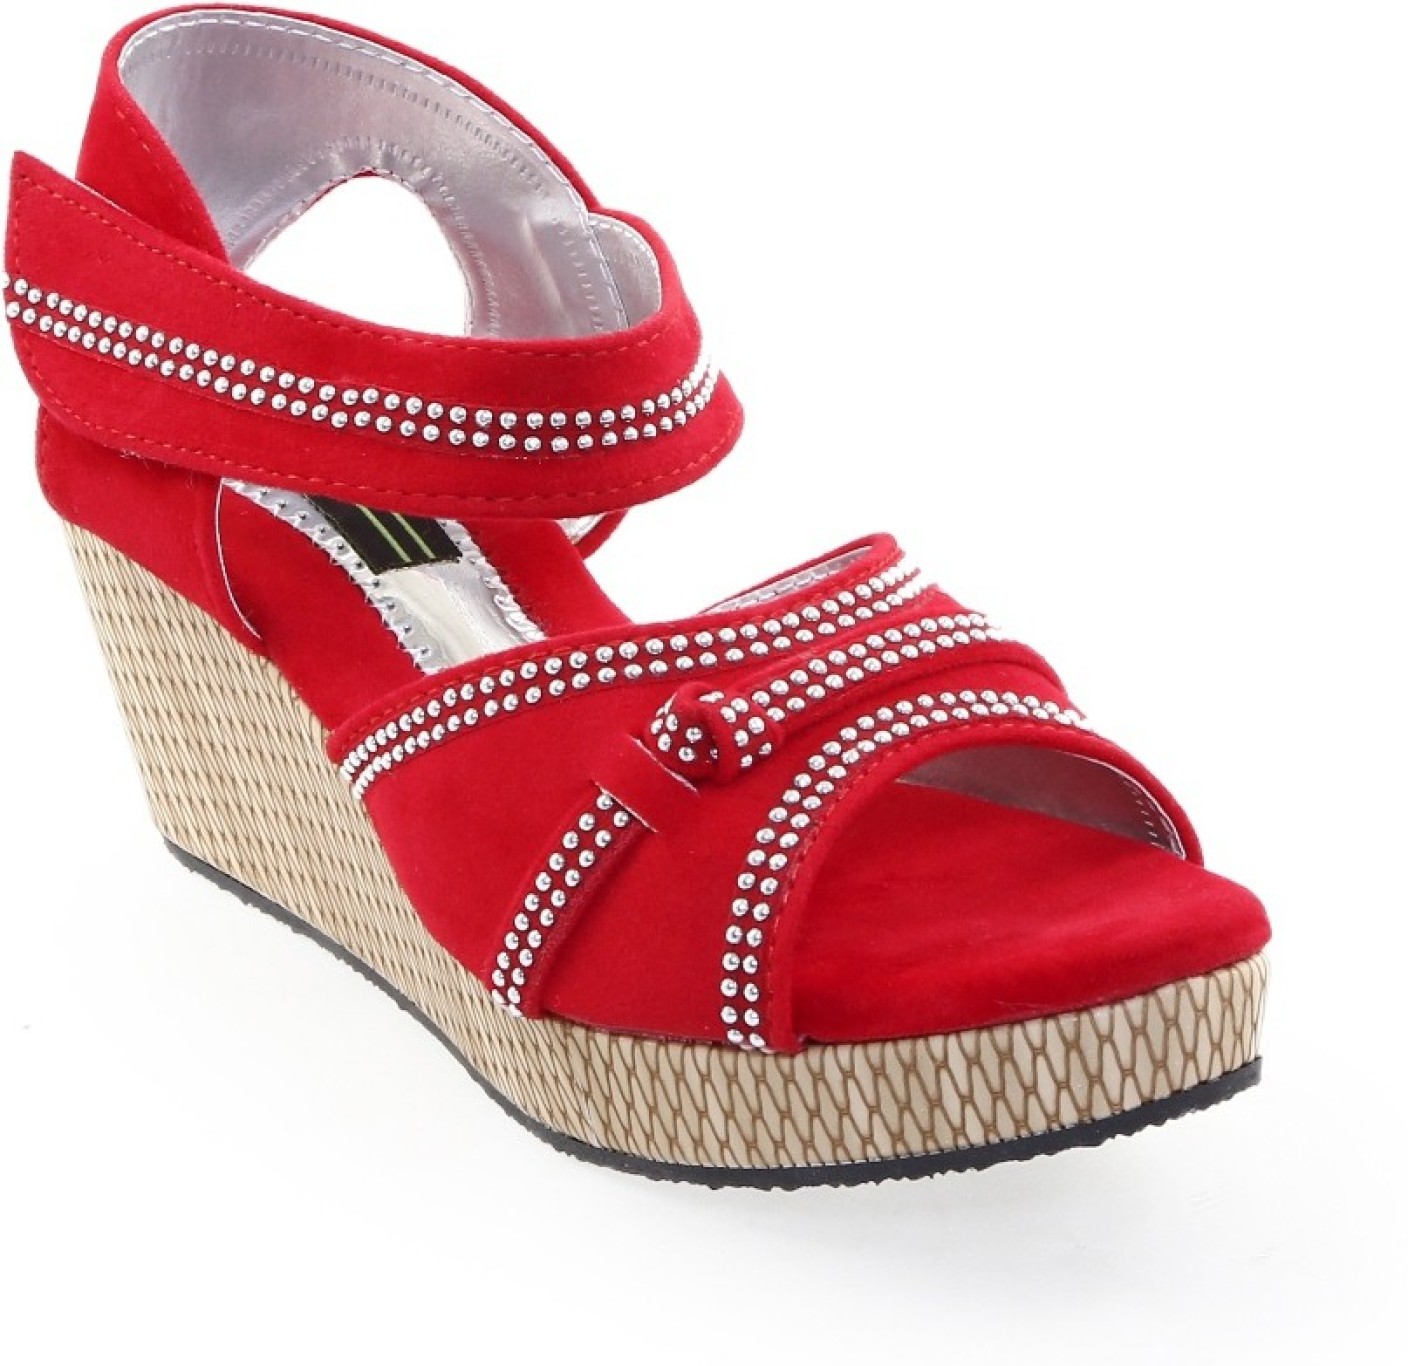 CatBird Girls Sports Sandals Price in India - Buy CatBird Girls Sports Sandals online at ...